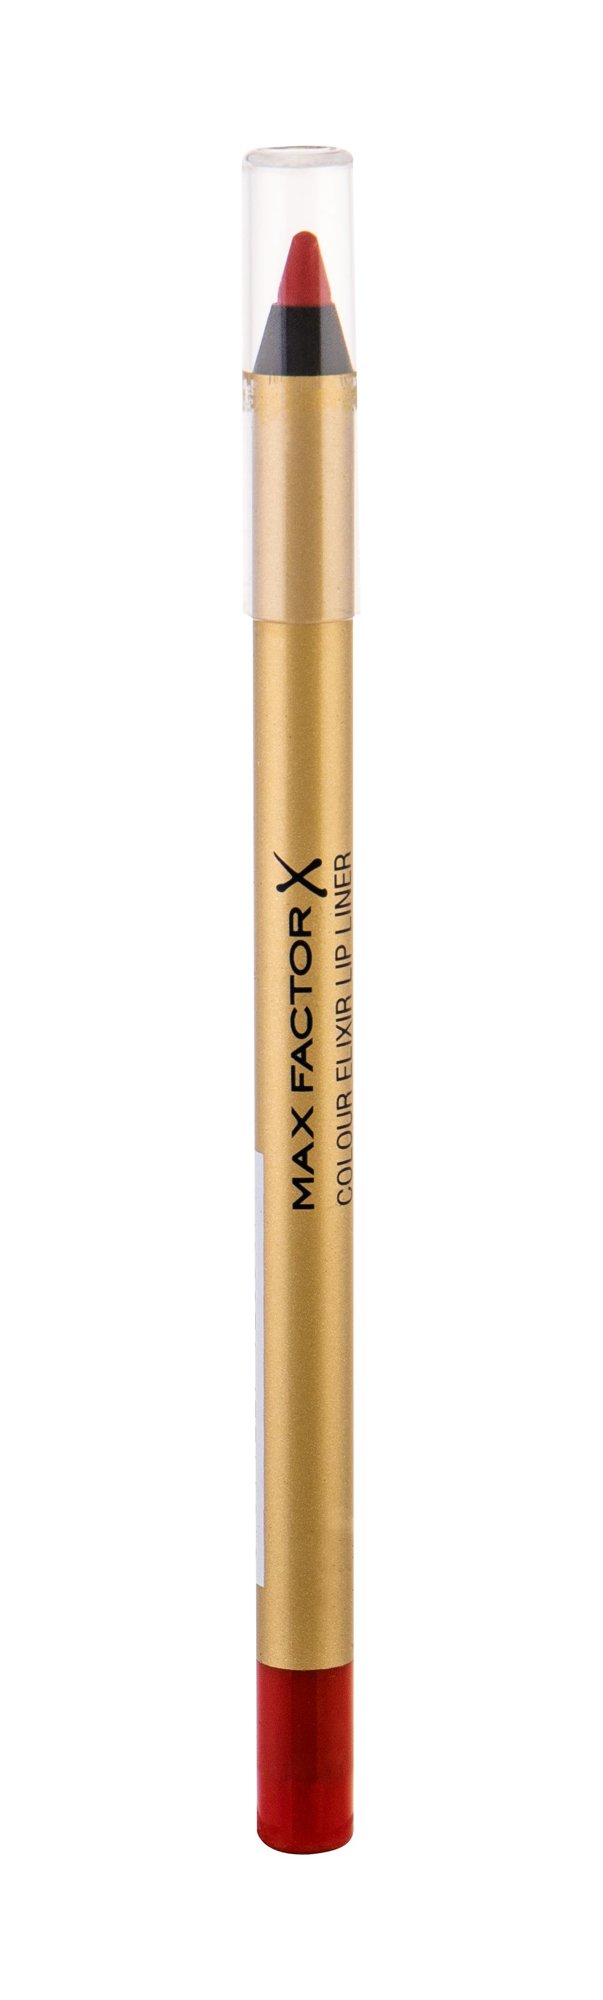 Max Factor Colour Elixir 2g lūpų pieštukas